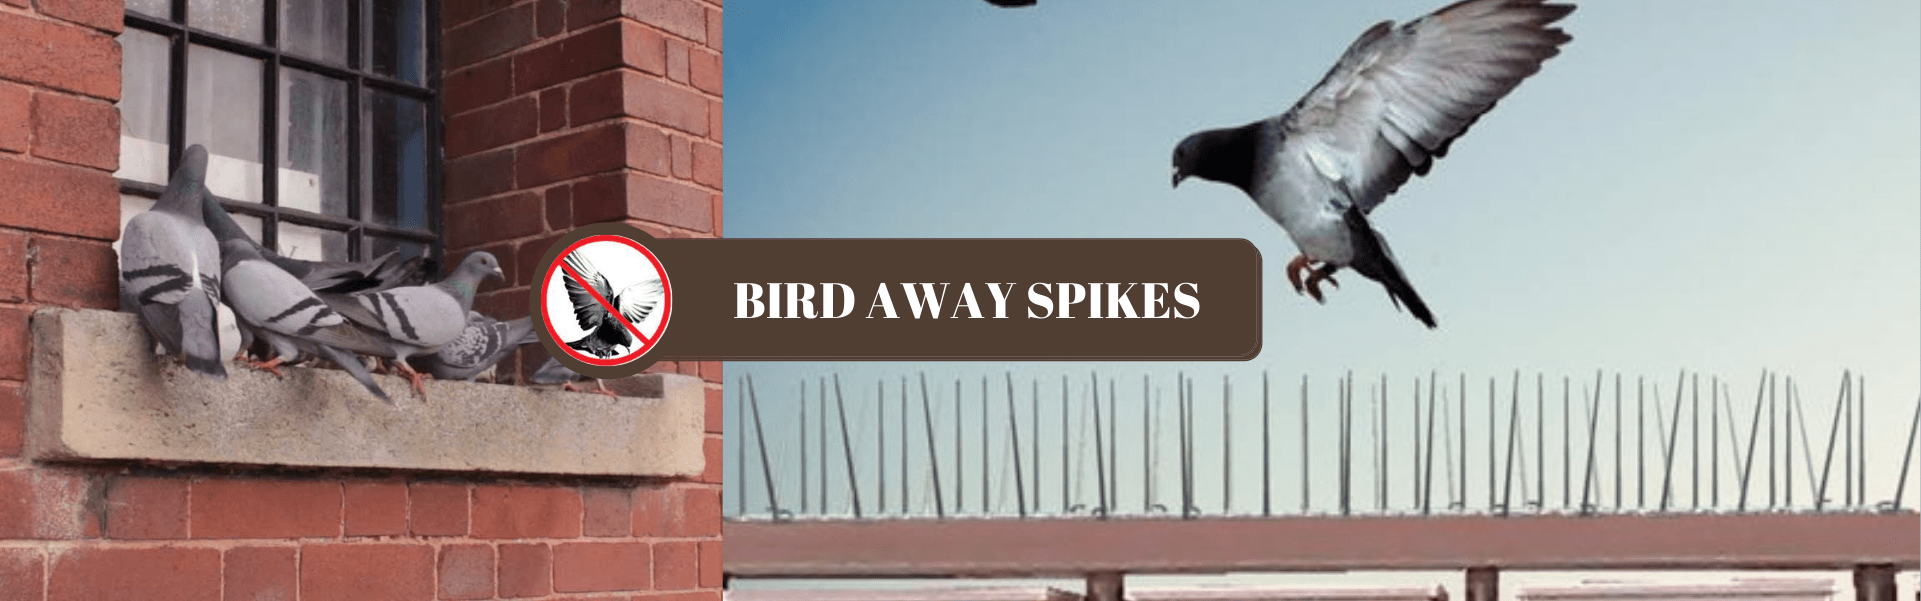 BIRD SPIKES SOLUTION